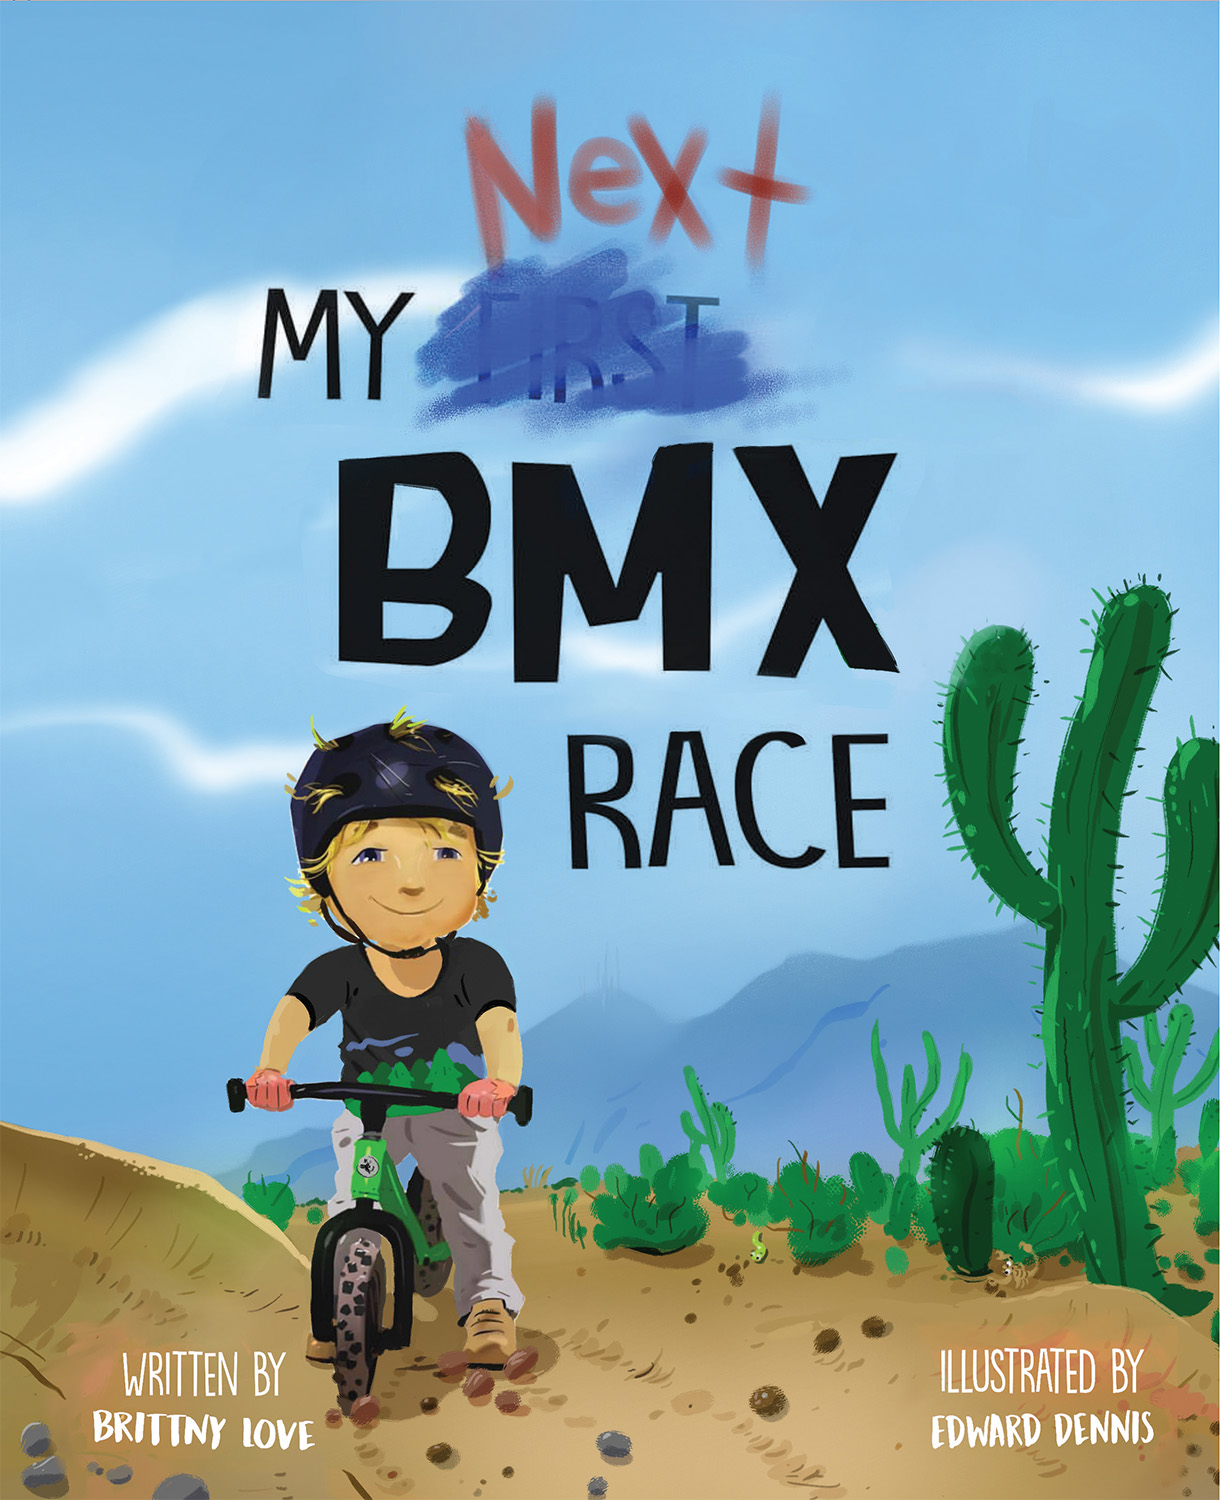 My Next BMX Race Book Cover